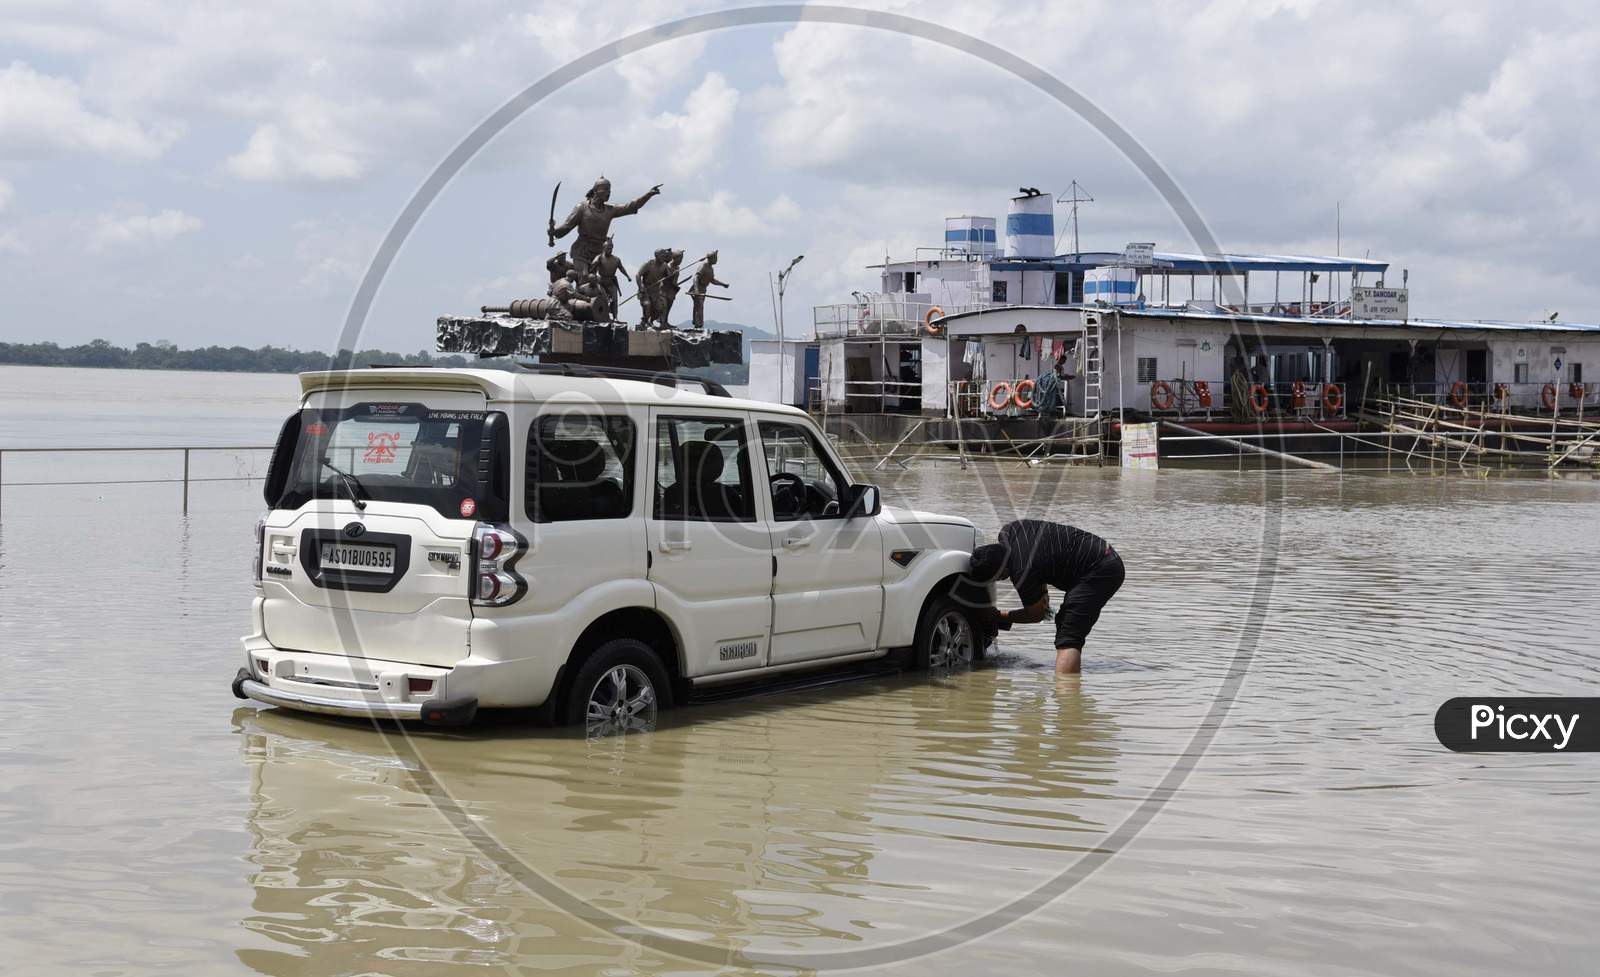 A man washing his car using flood water